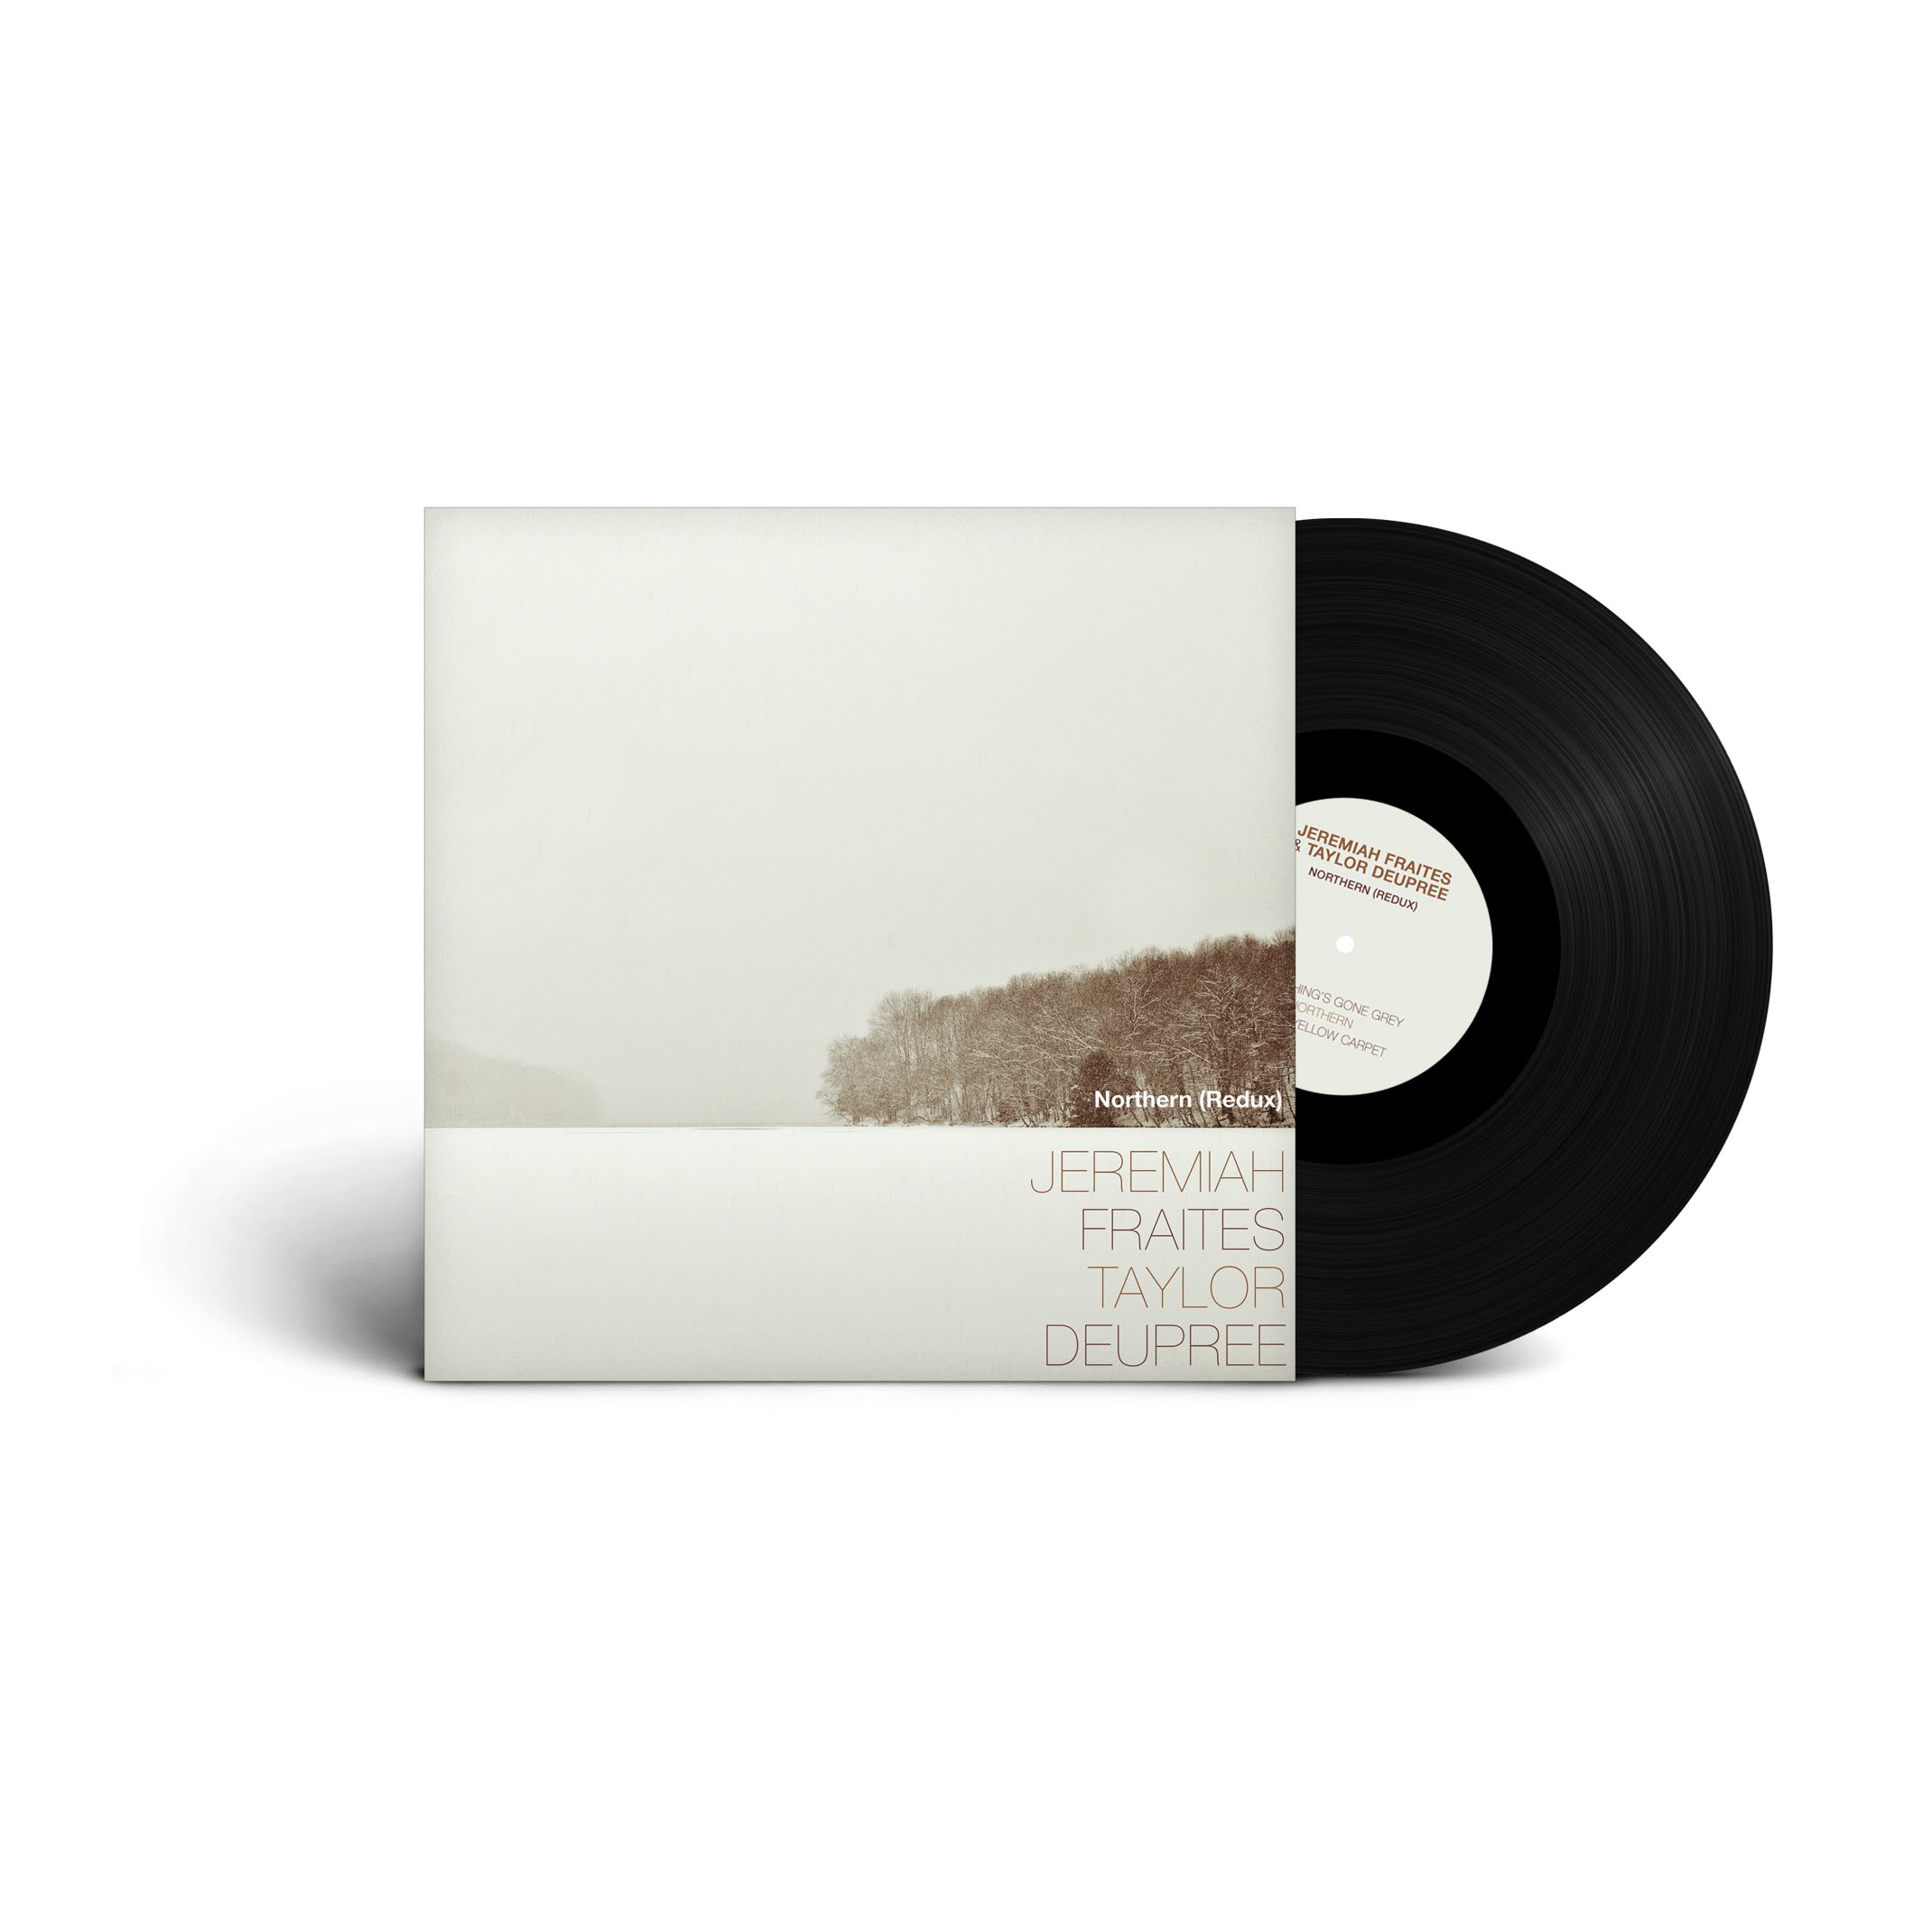 Jeremiah Fraites - Northern (Redux): Vinyl LP